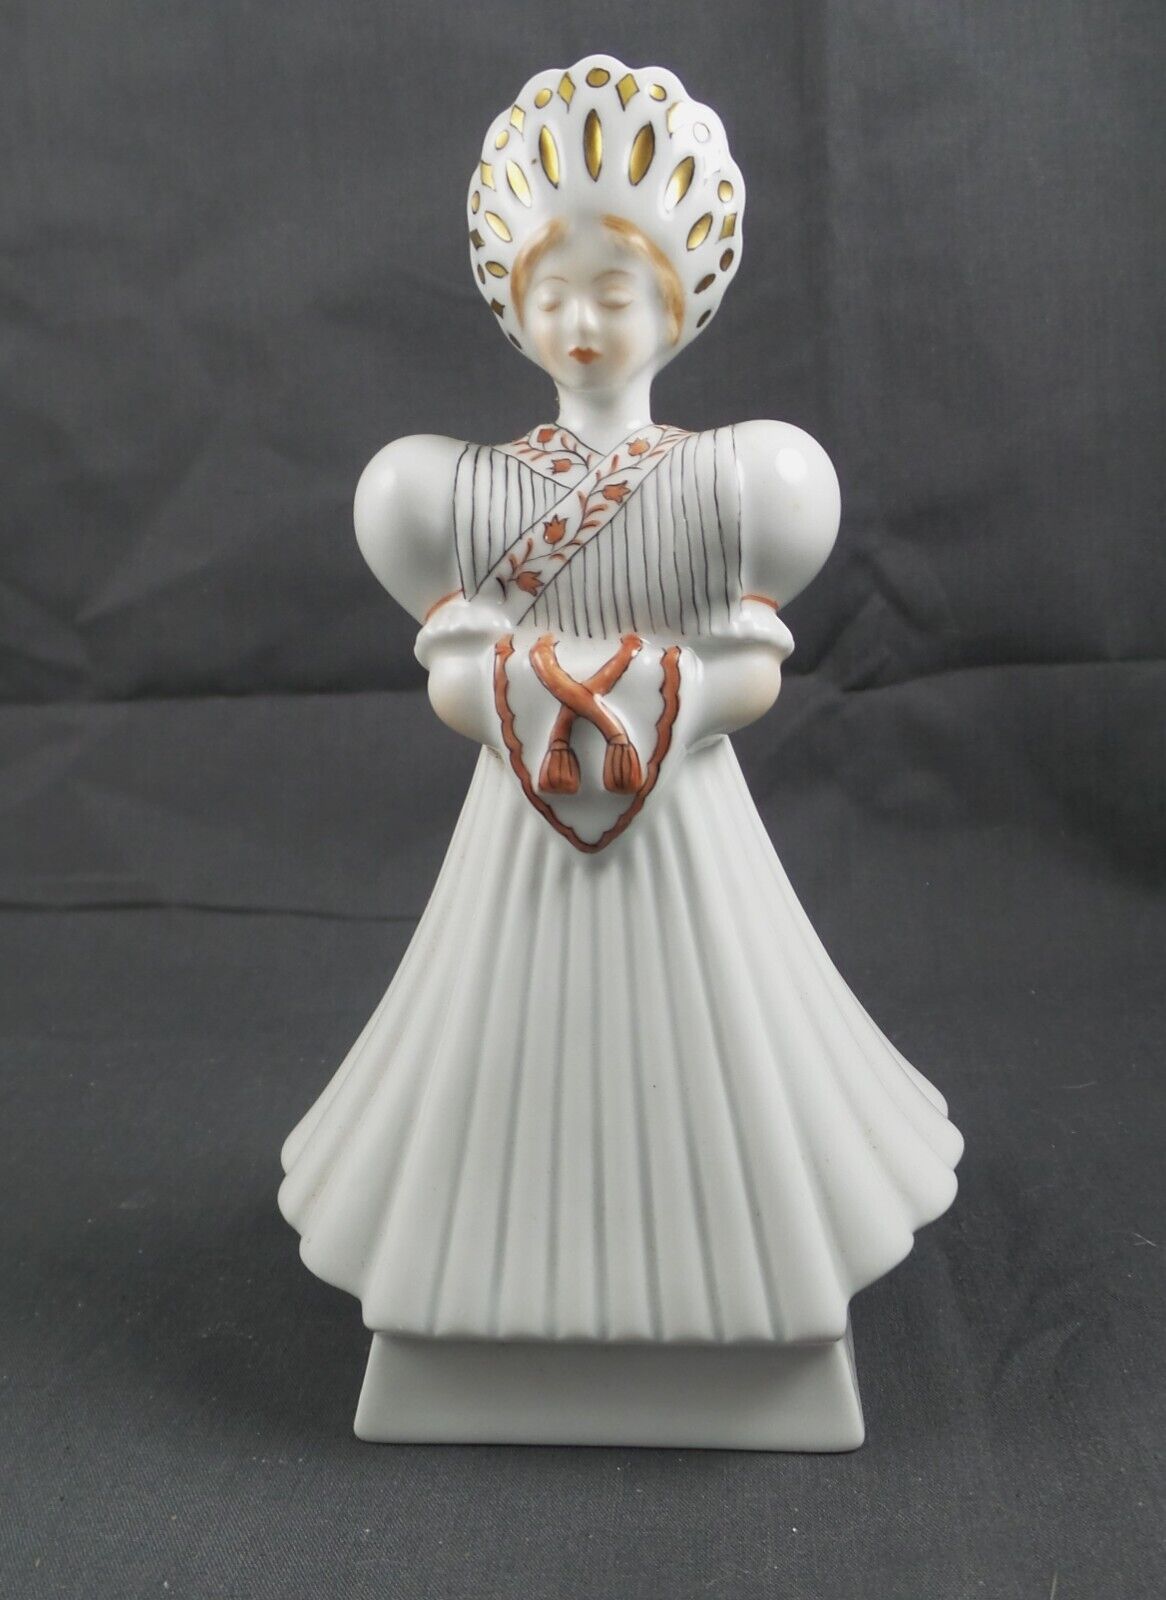 Vintage Herend Hungary Porcelain Hand Painted Bride Figure / Figurine 5400